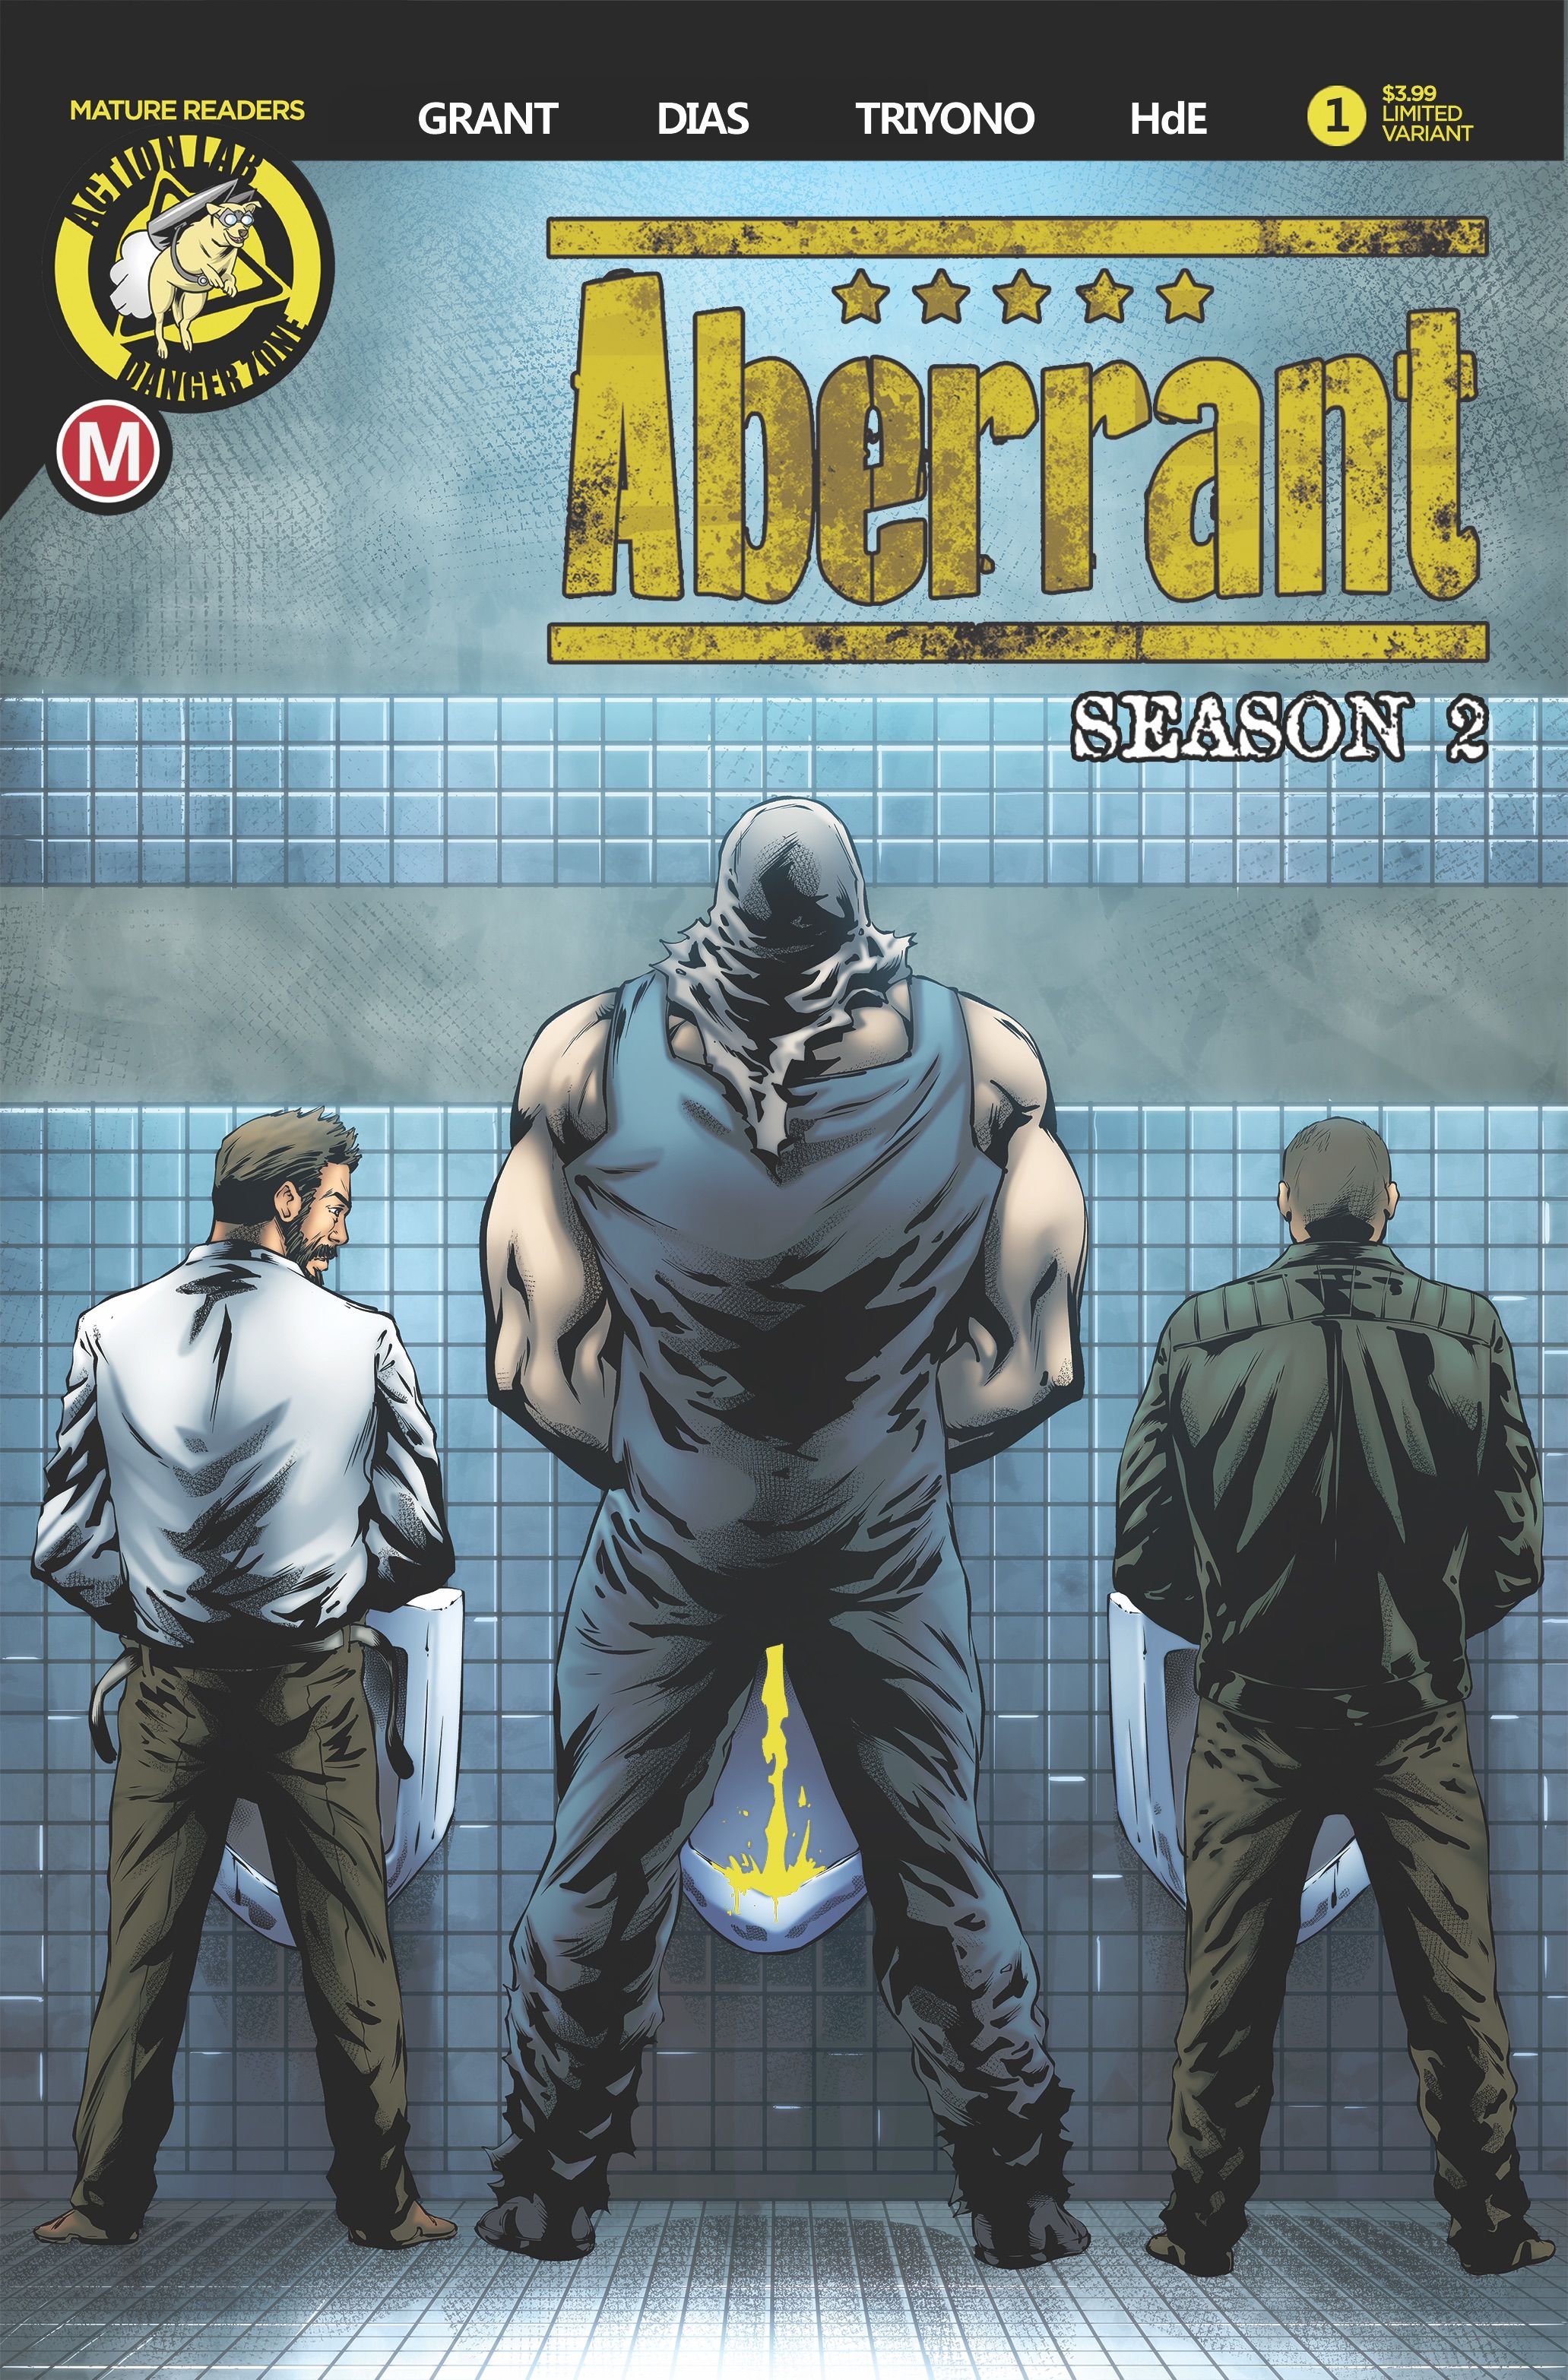 Aberrant Season 2 Issue #1 Variant Cover